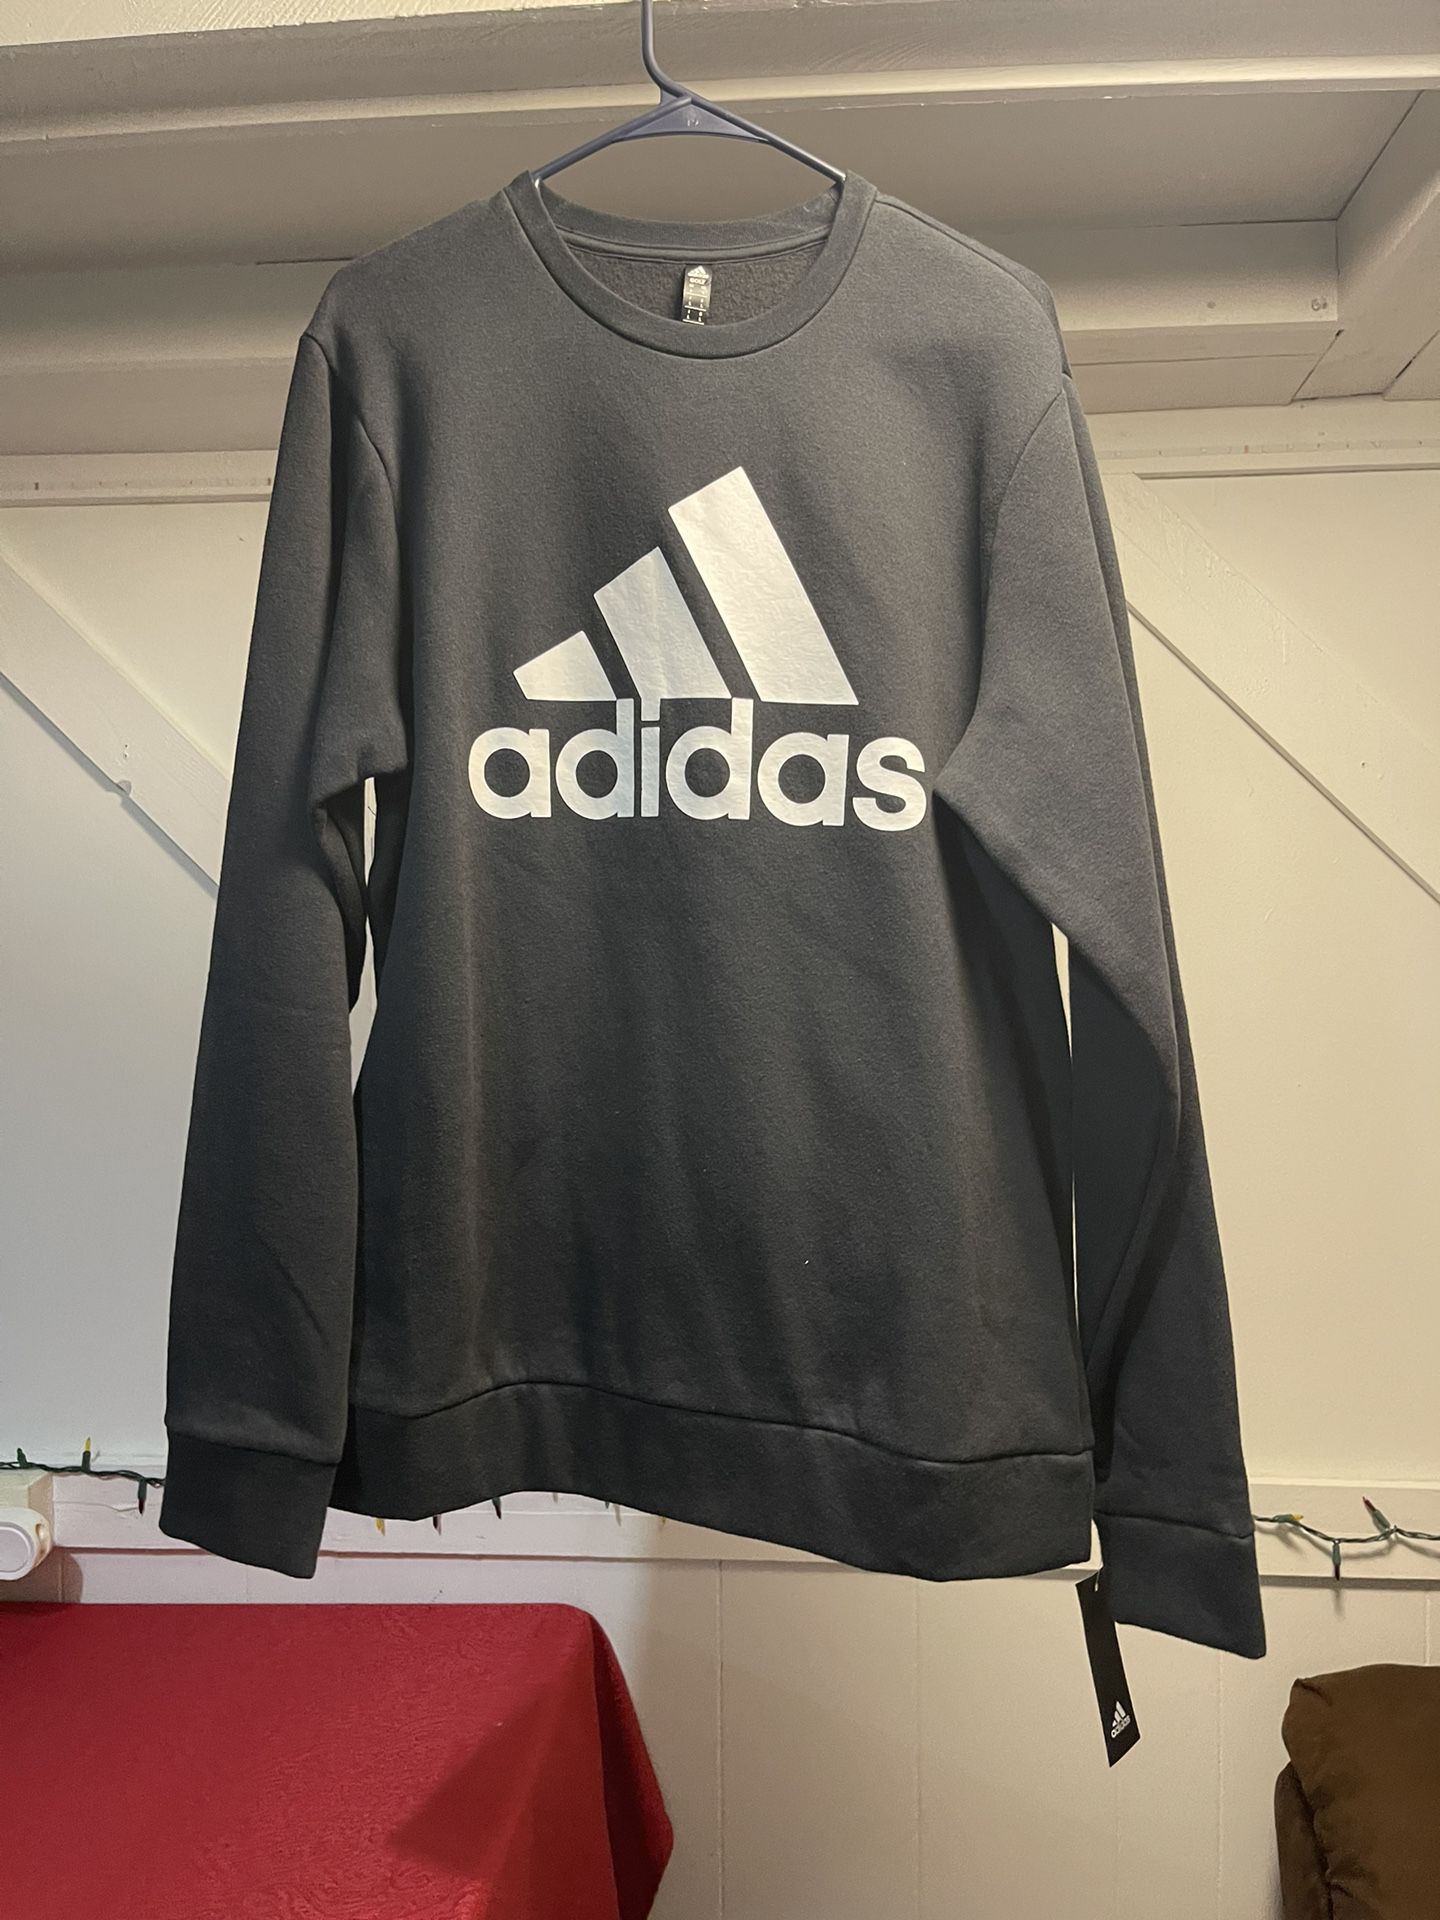 Adidas Men’s Large Sweatshirt New